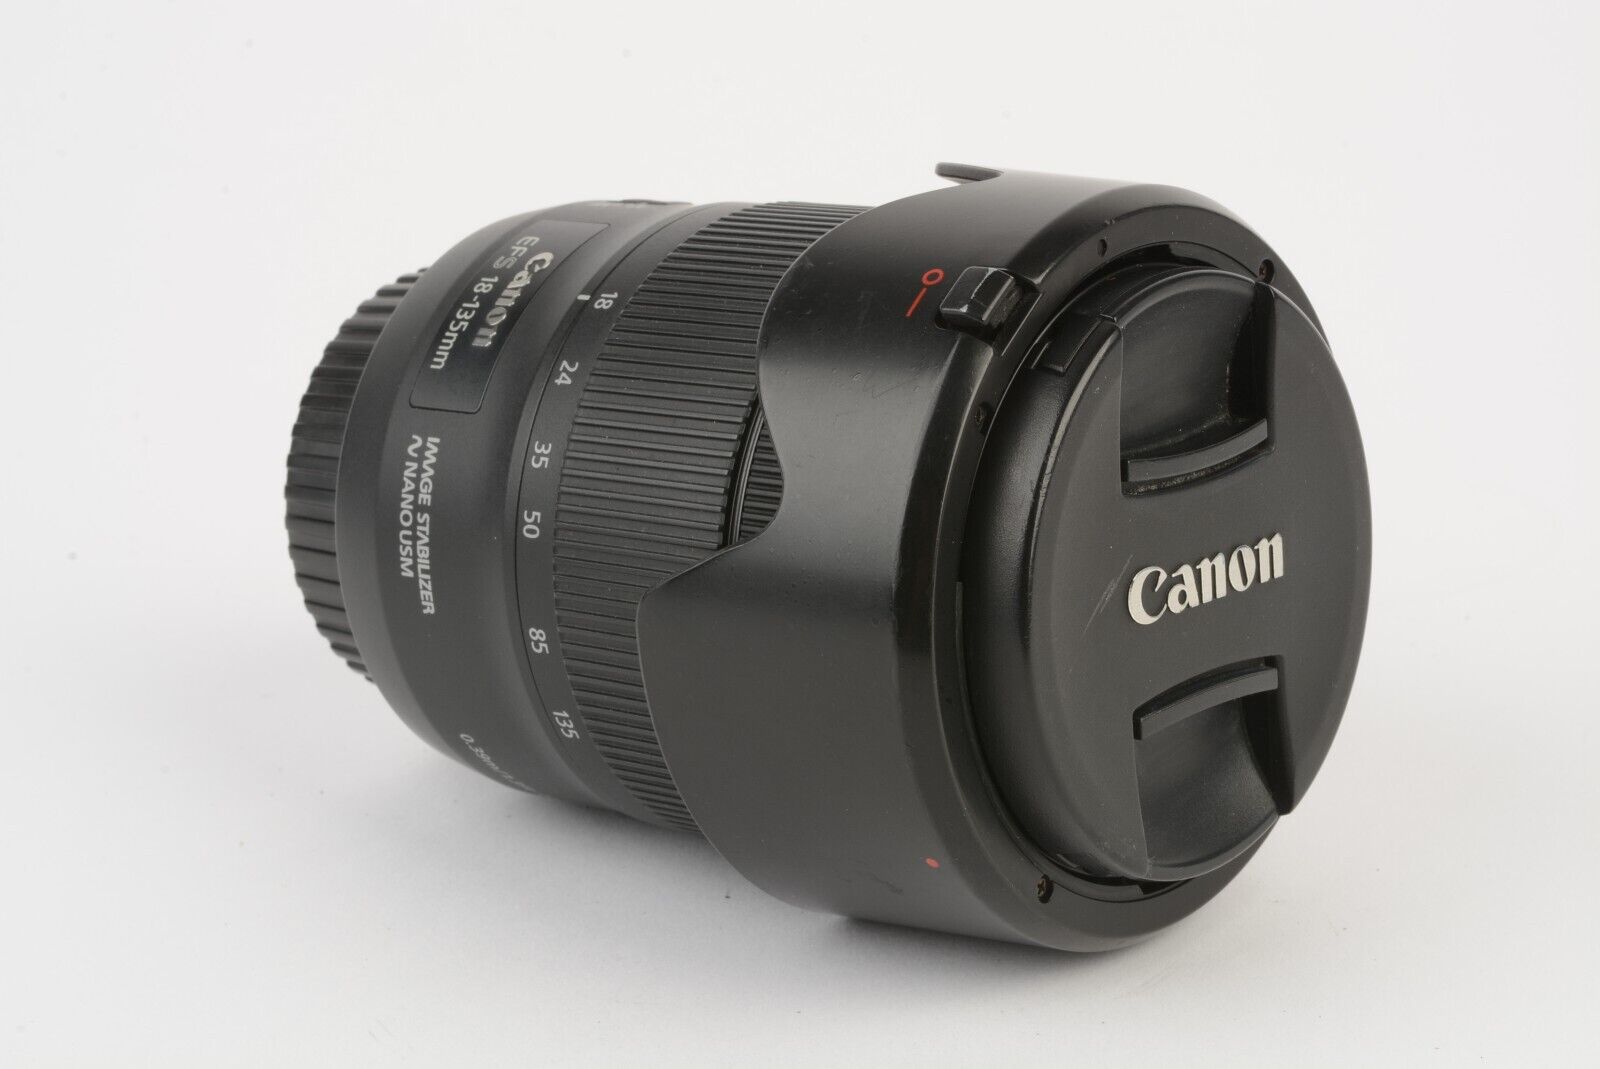 Canon EFS 18-135mm f3.5-5.6 IS nano USM zoom lens